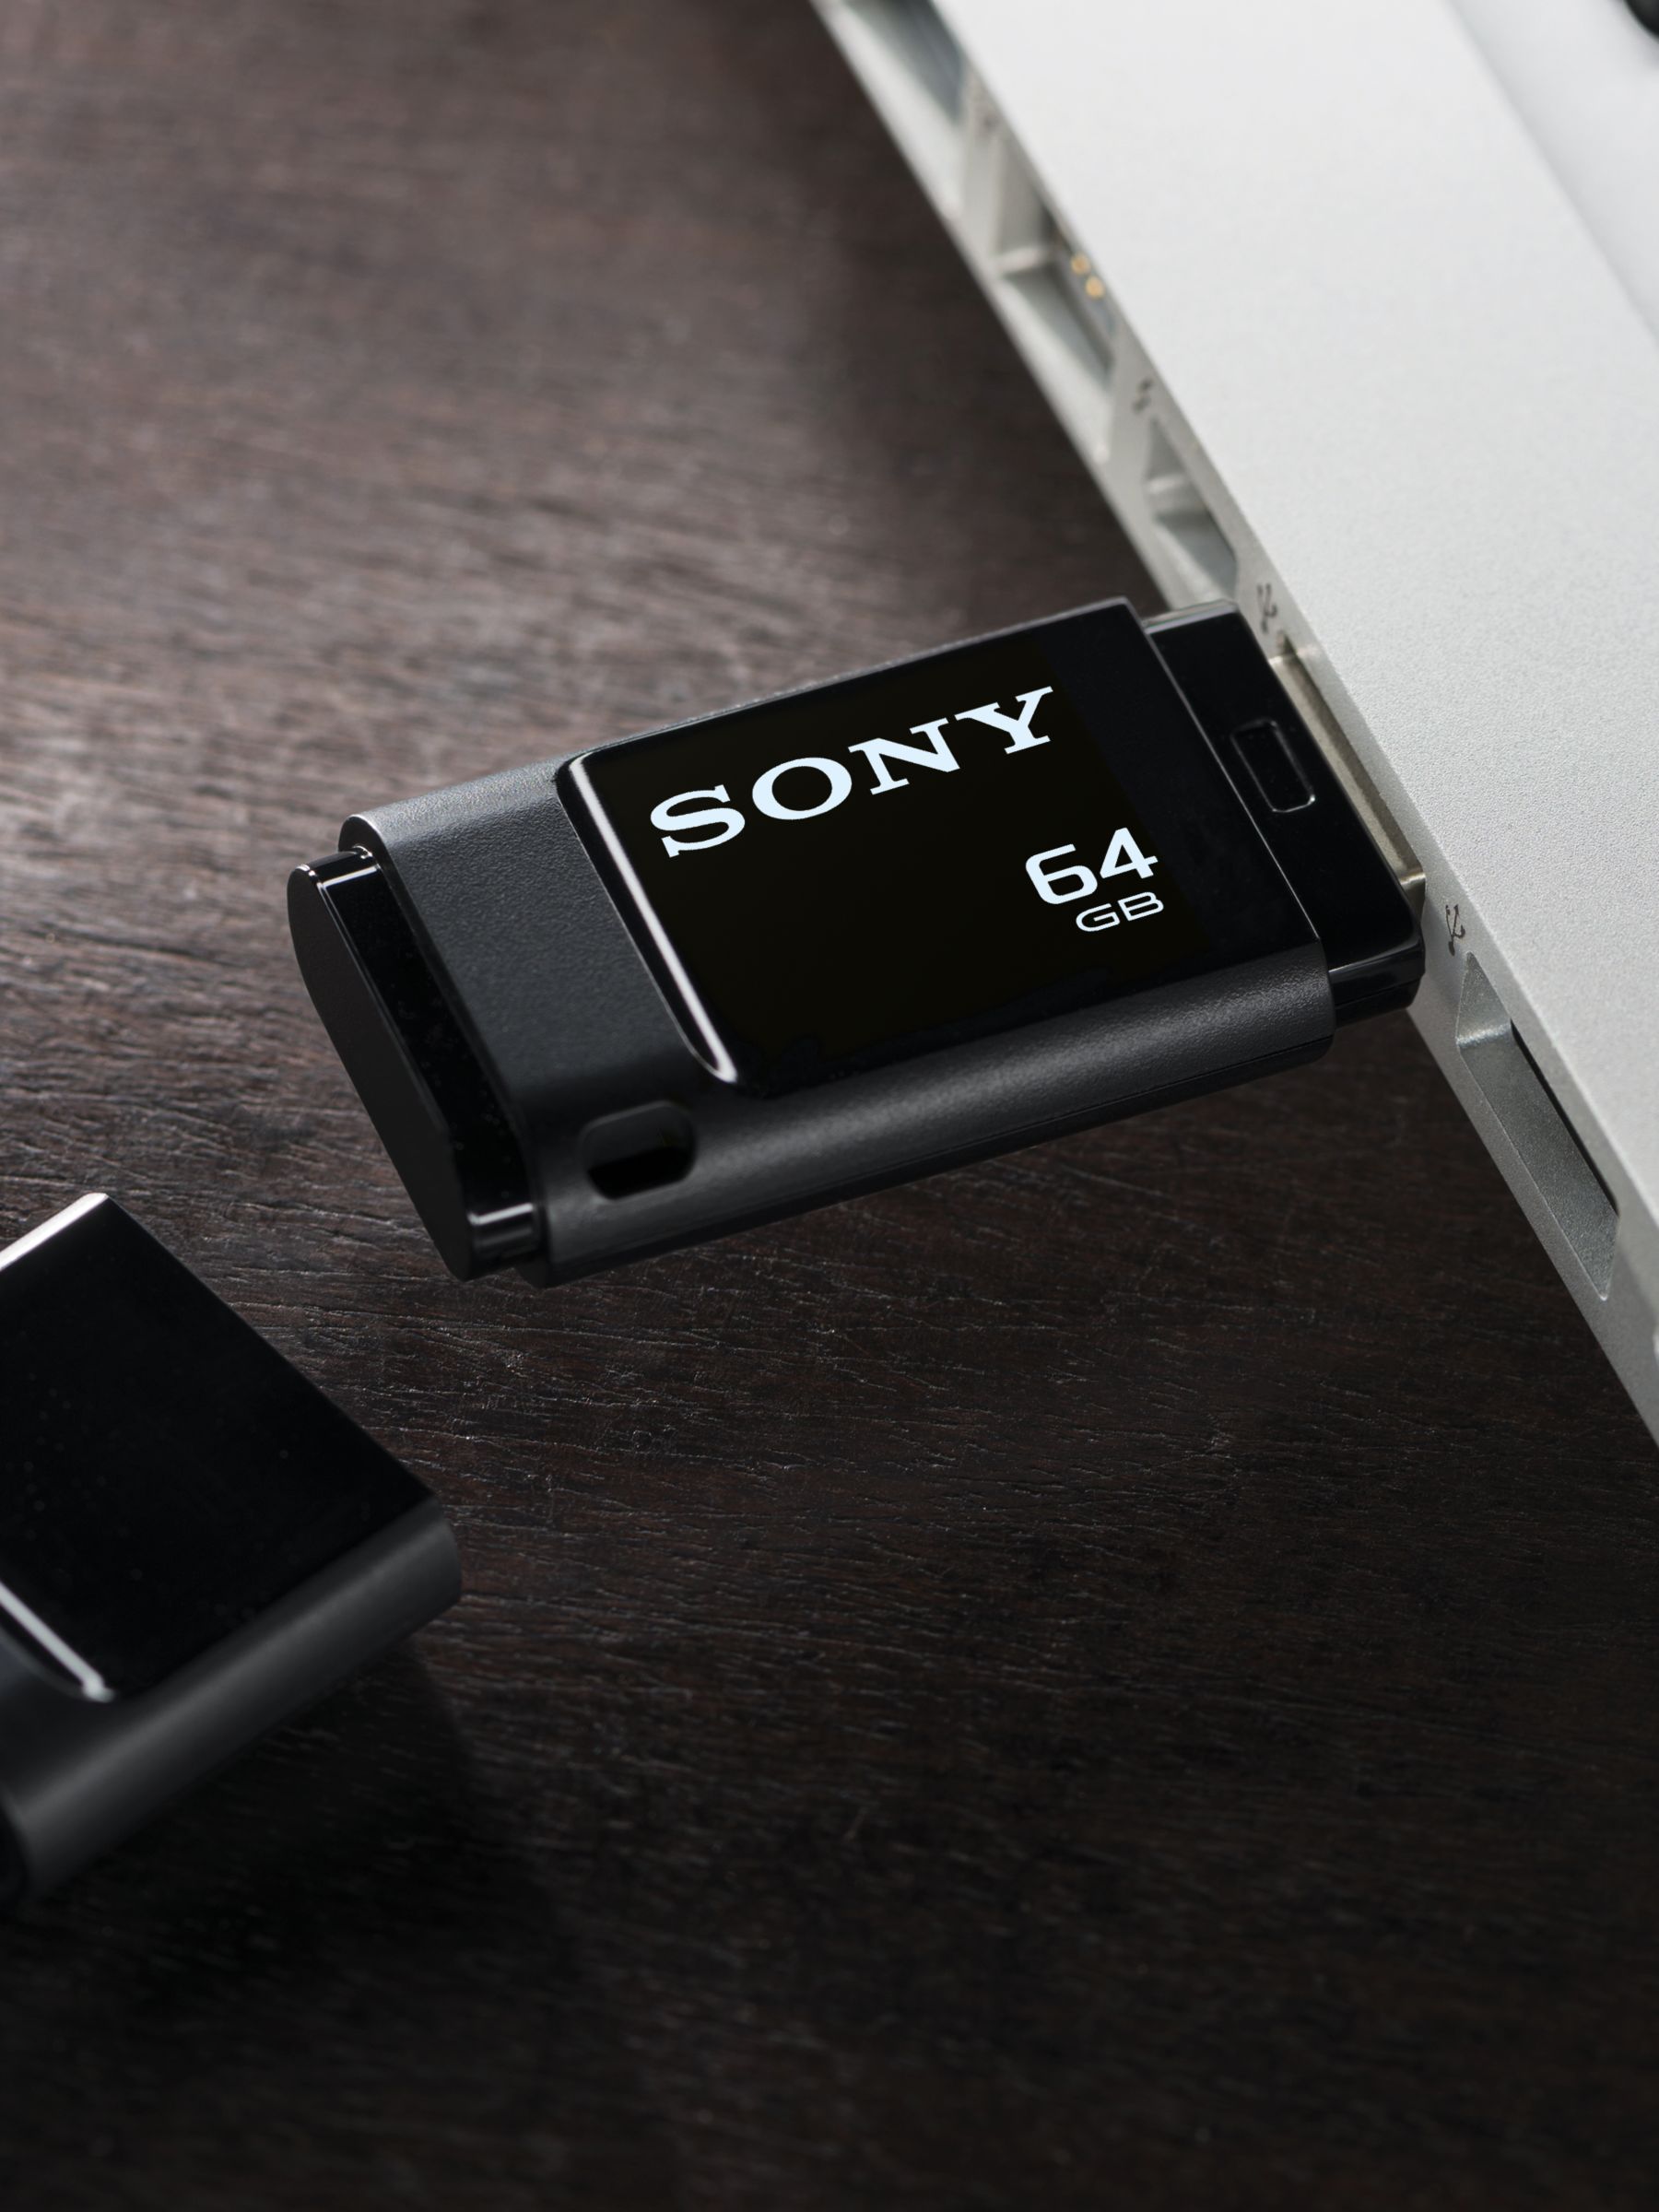 Sony Portable Usb Flash Storage Drive Black 64gb At John Lewis And Partners 4237